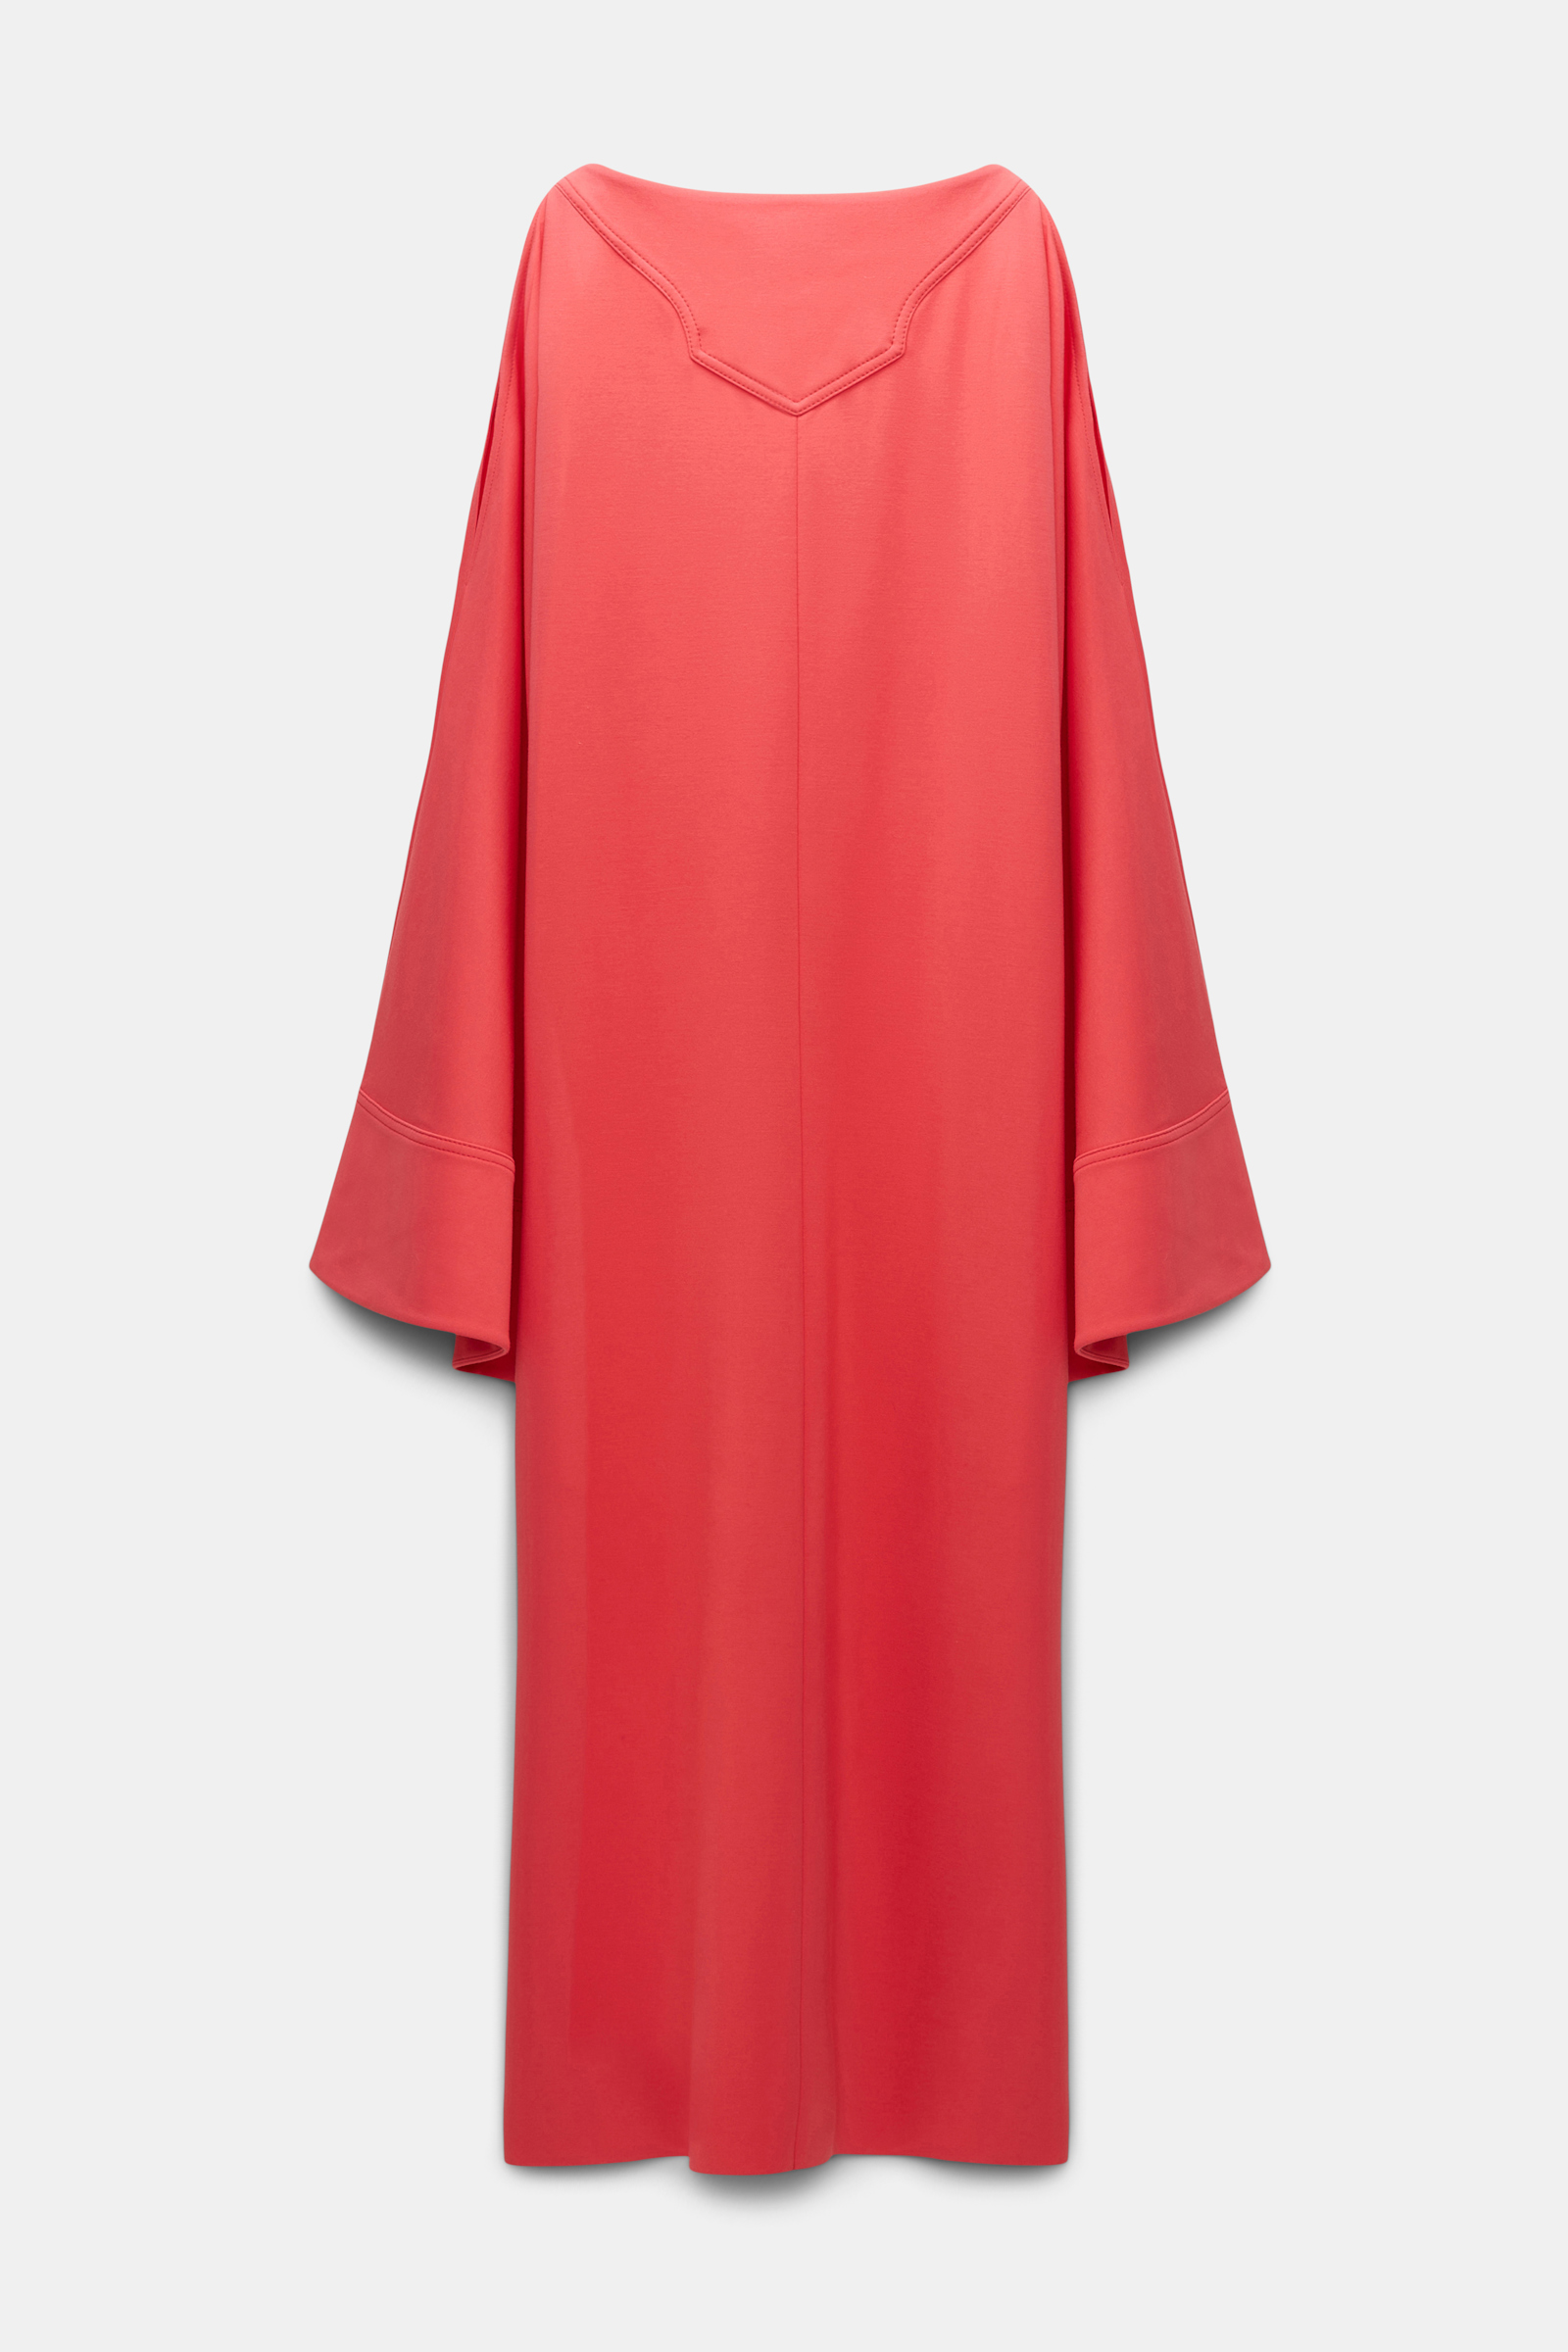 Dorothee Schumacher Tunic dress in lightweight Punto Milano medium coral